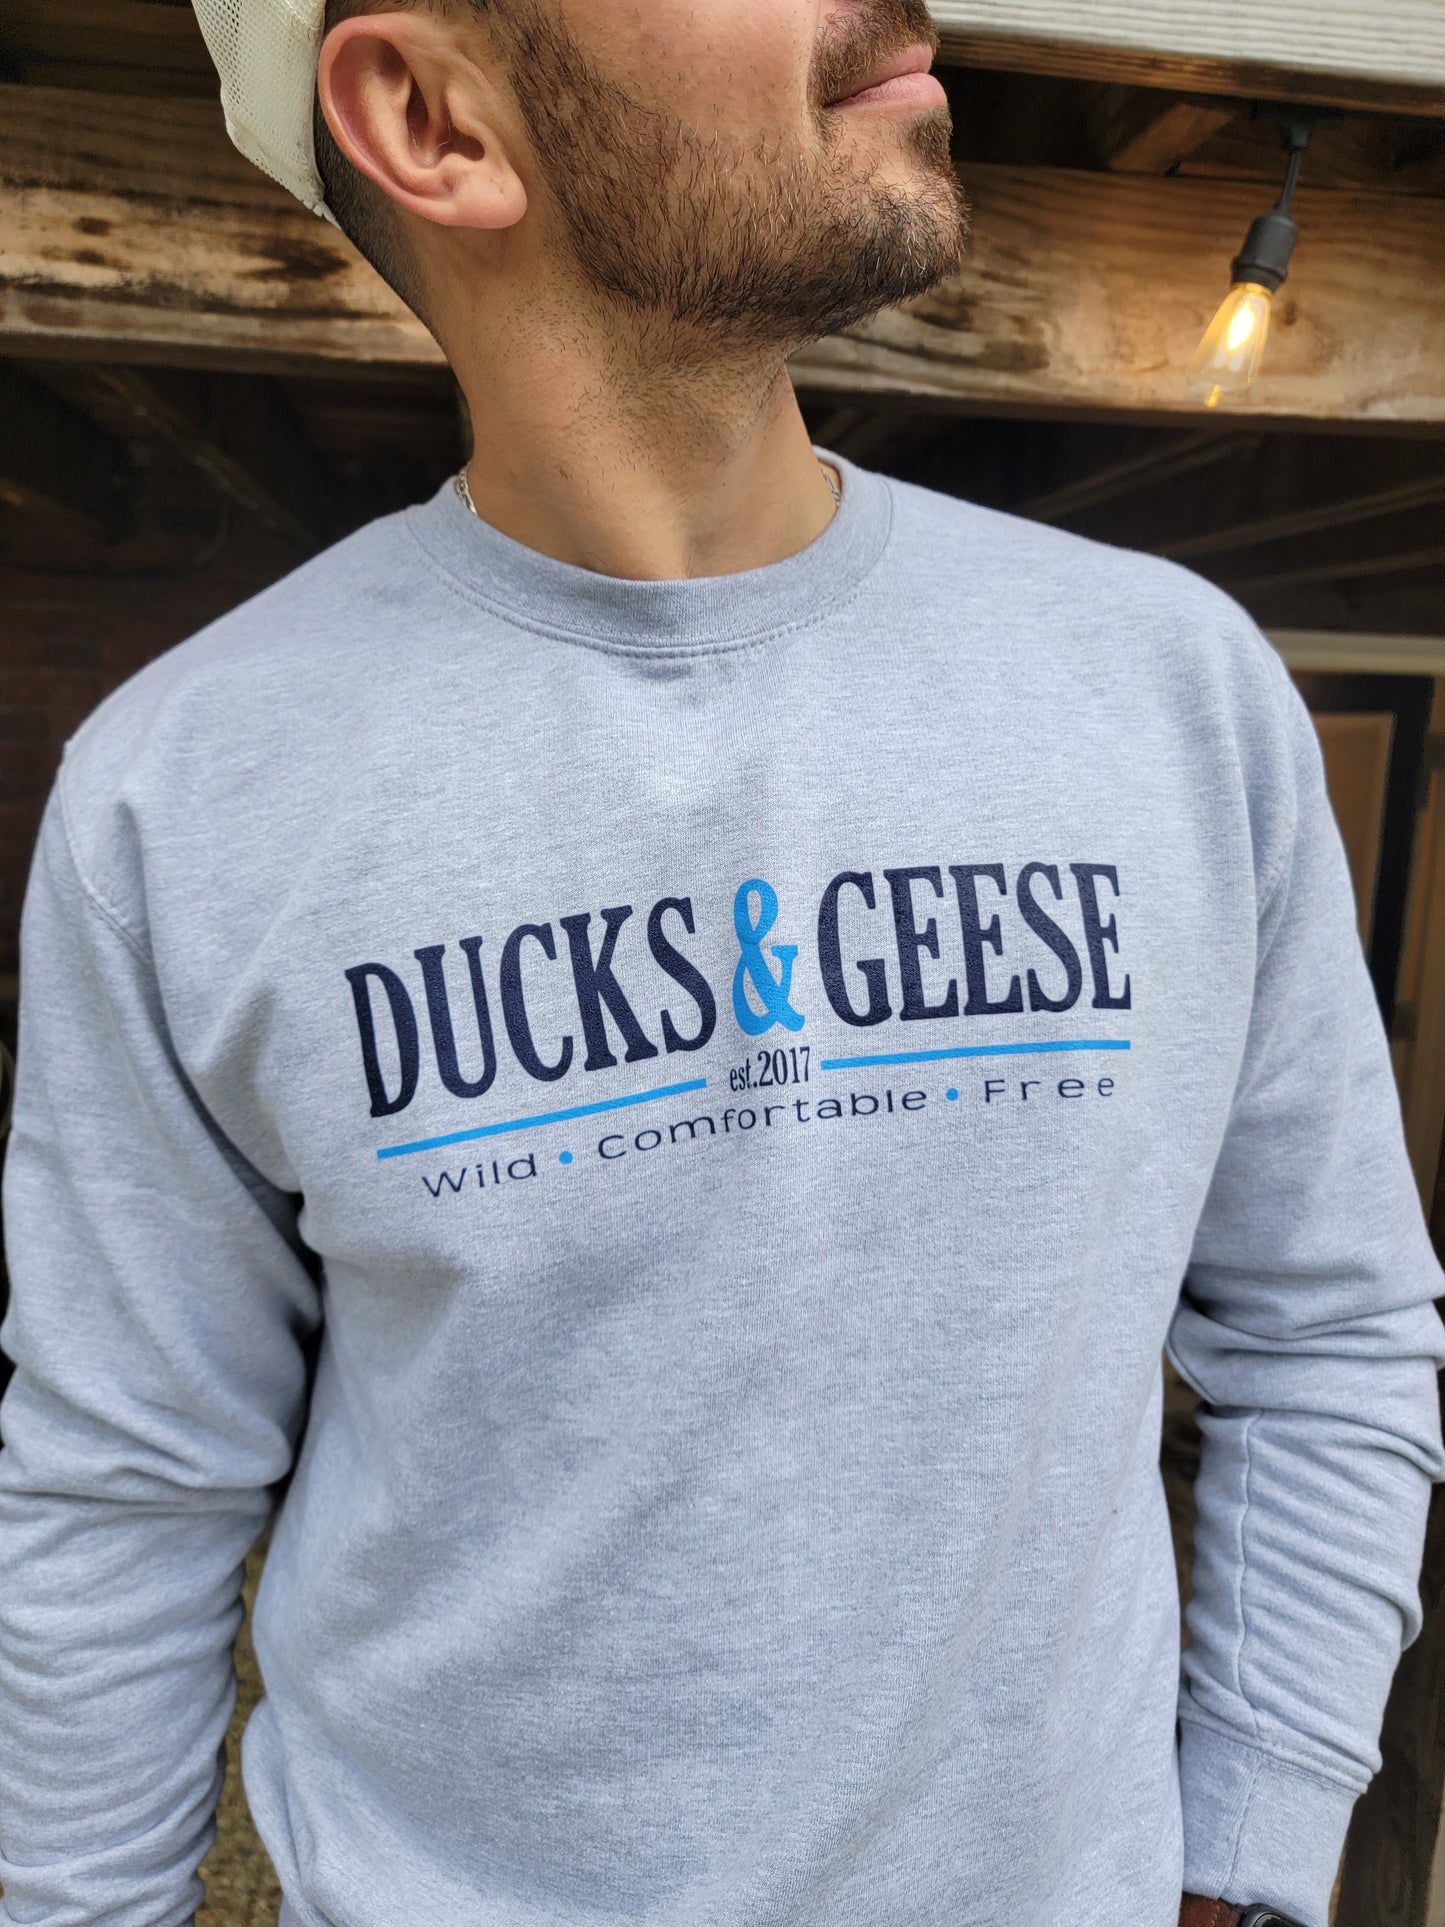 Ducks and geese ash grey crewneck